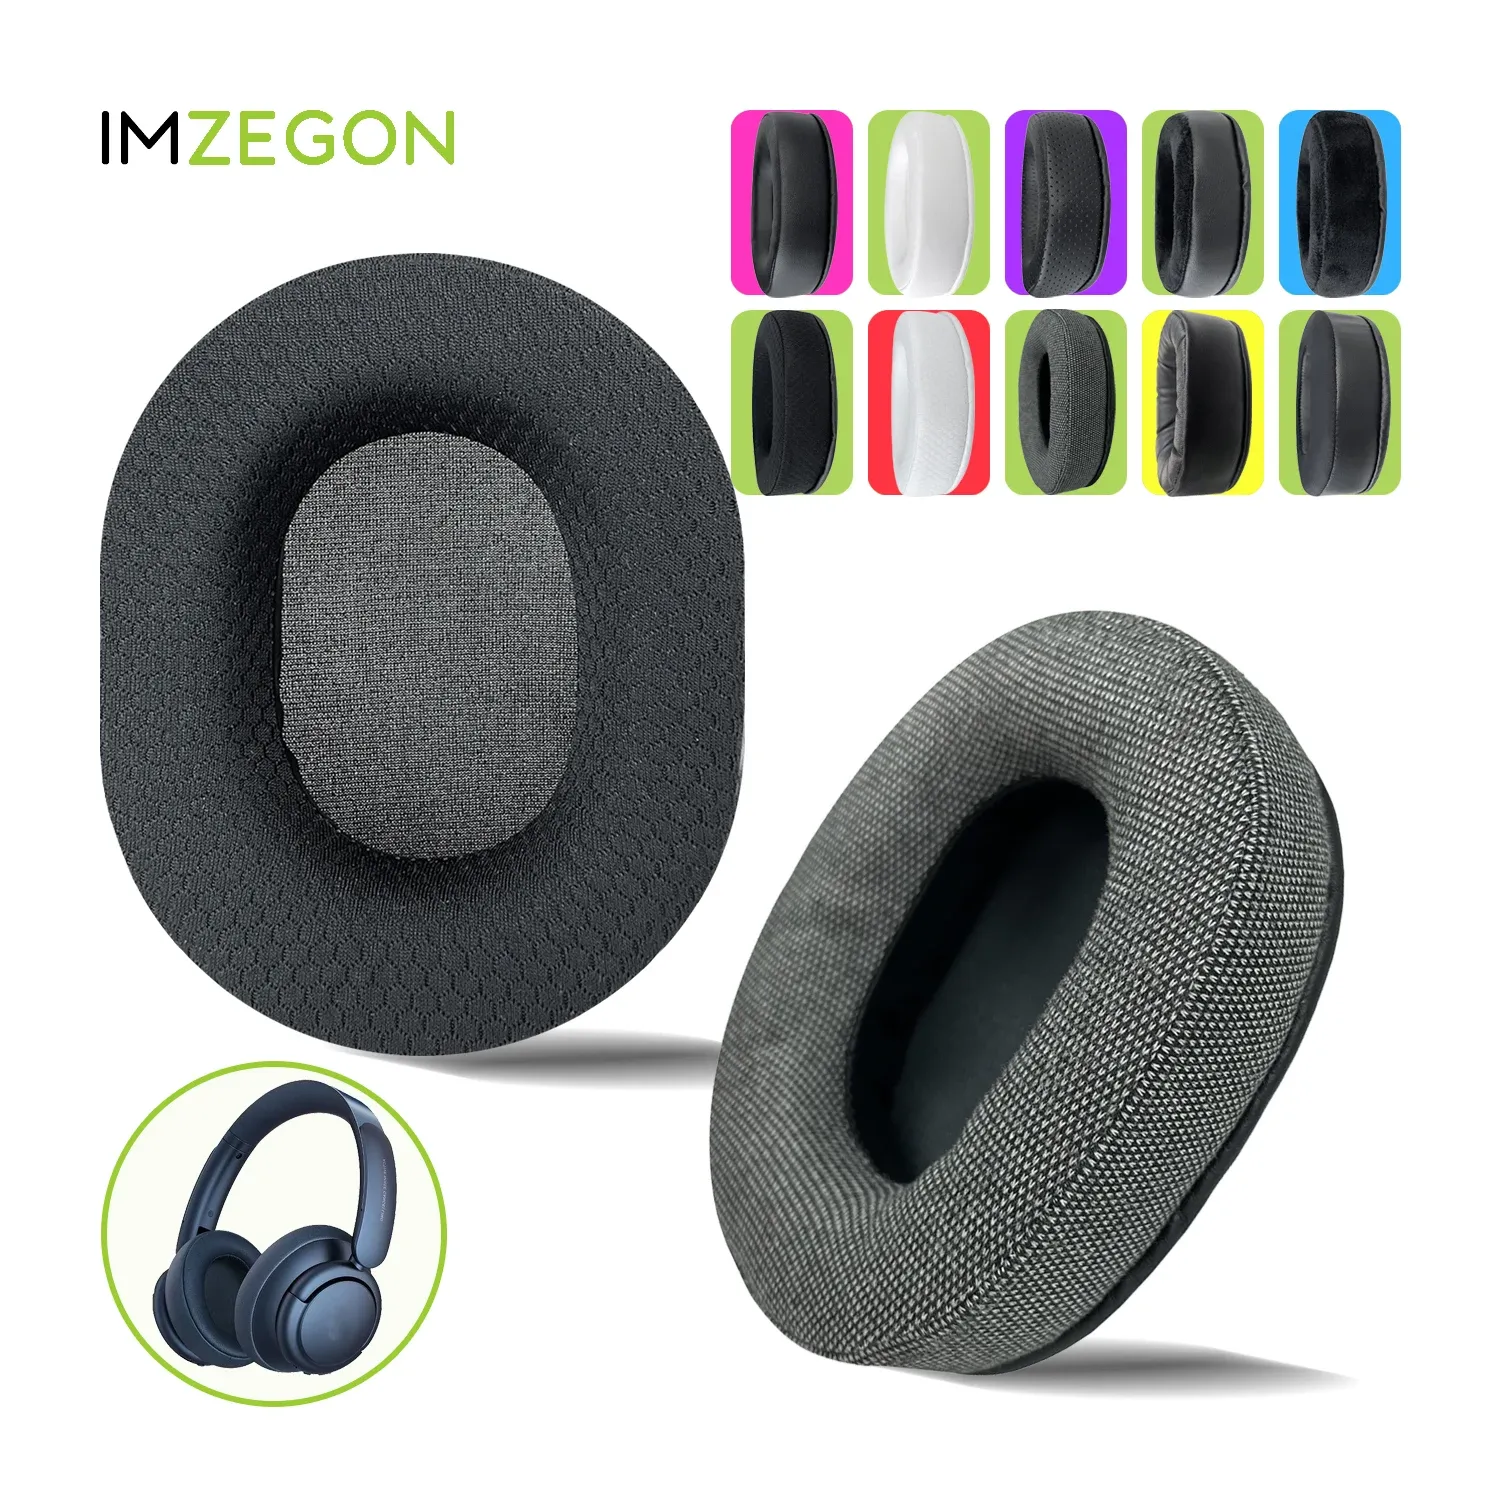 Accessories IMZEGON Replacement Earpads Headband for Anker Soundcore Life Q30, Q35, Q10, Q20 Headphones Ear Cushion Sleeve Cover Earmuffs